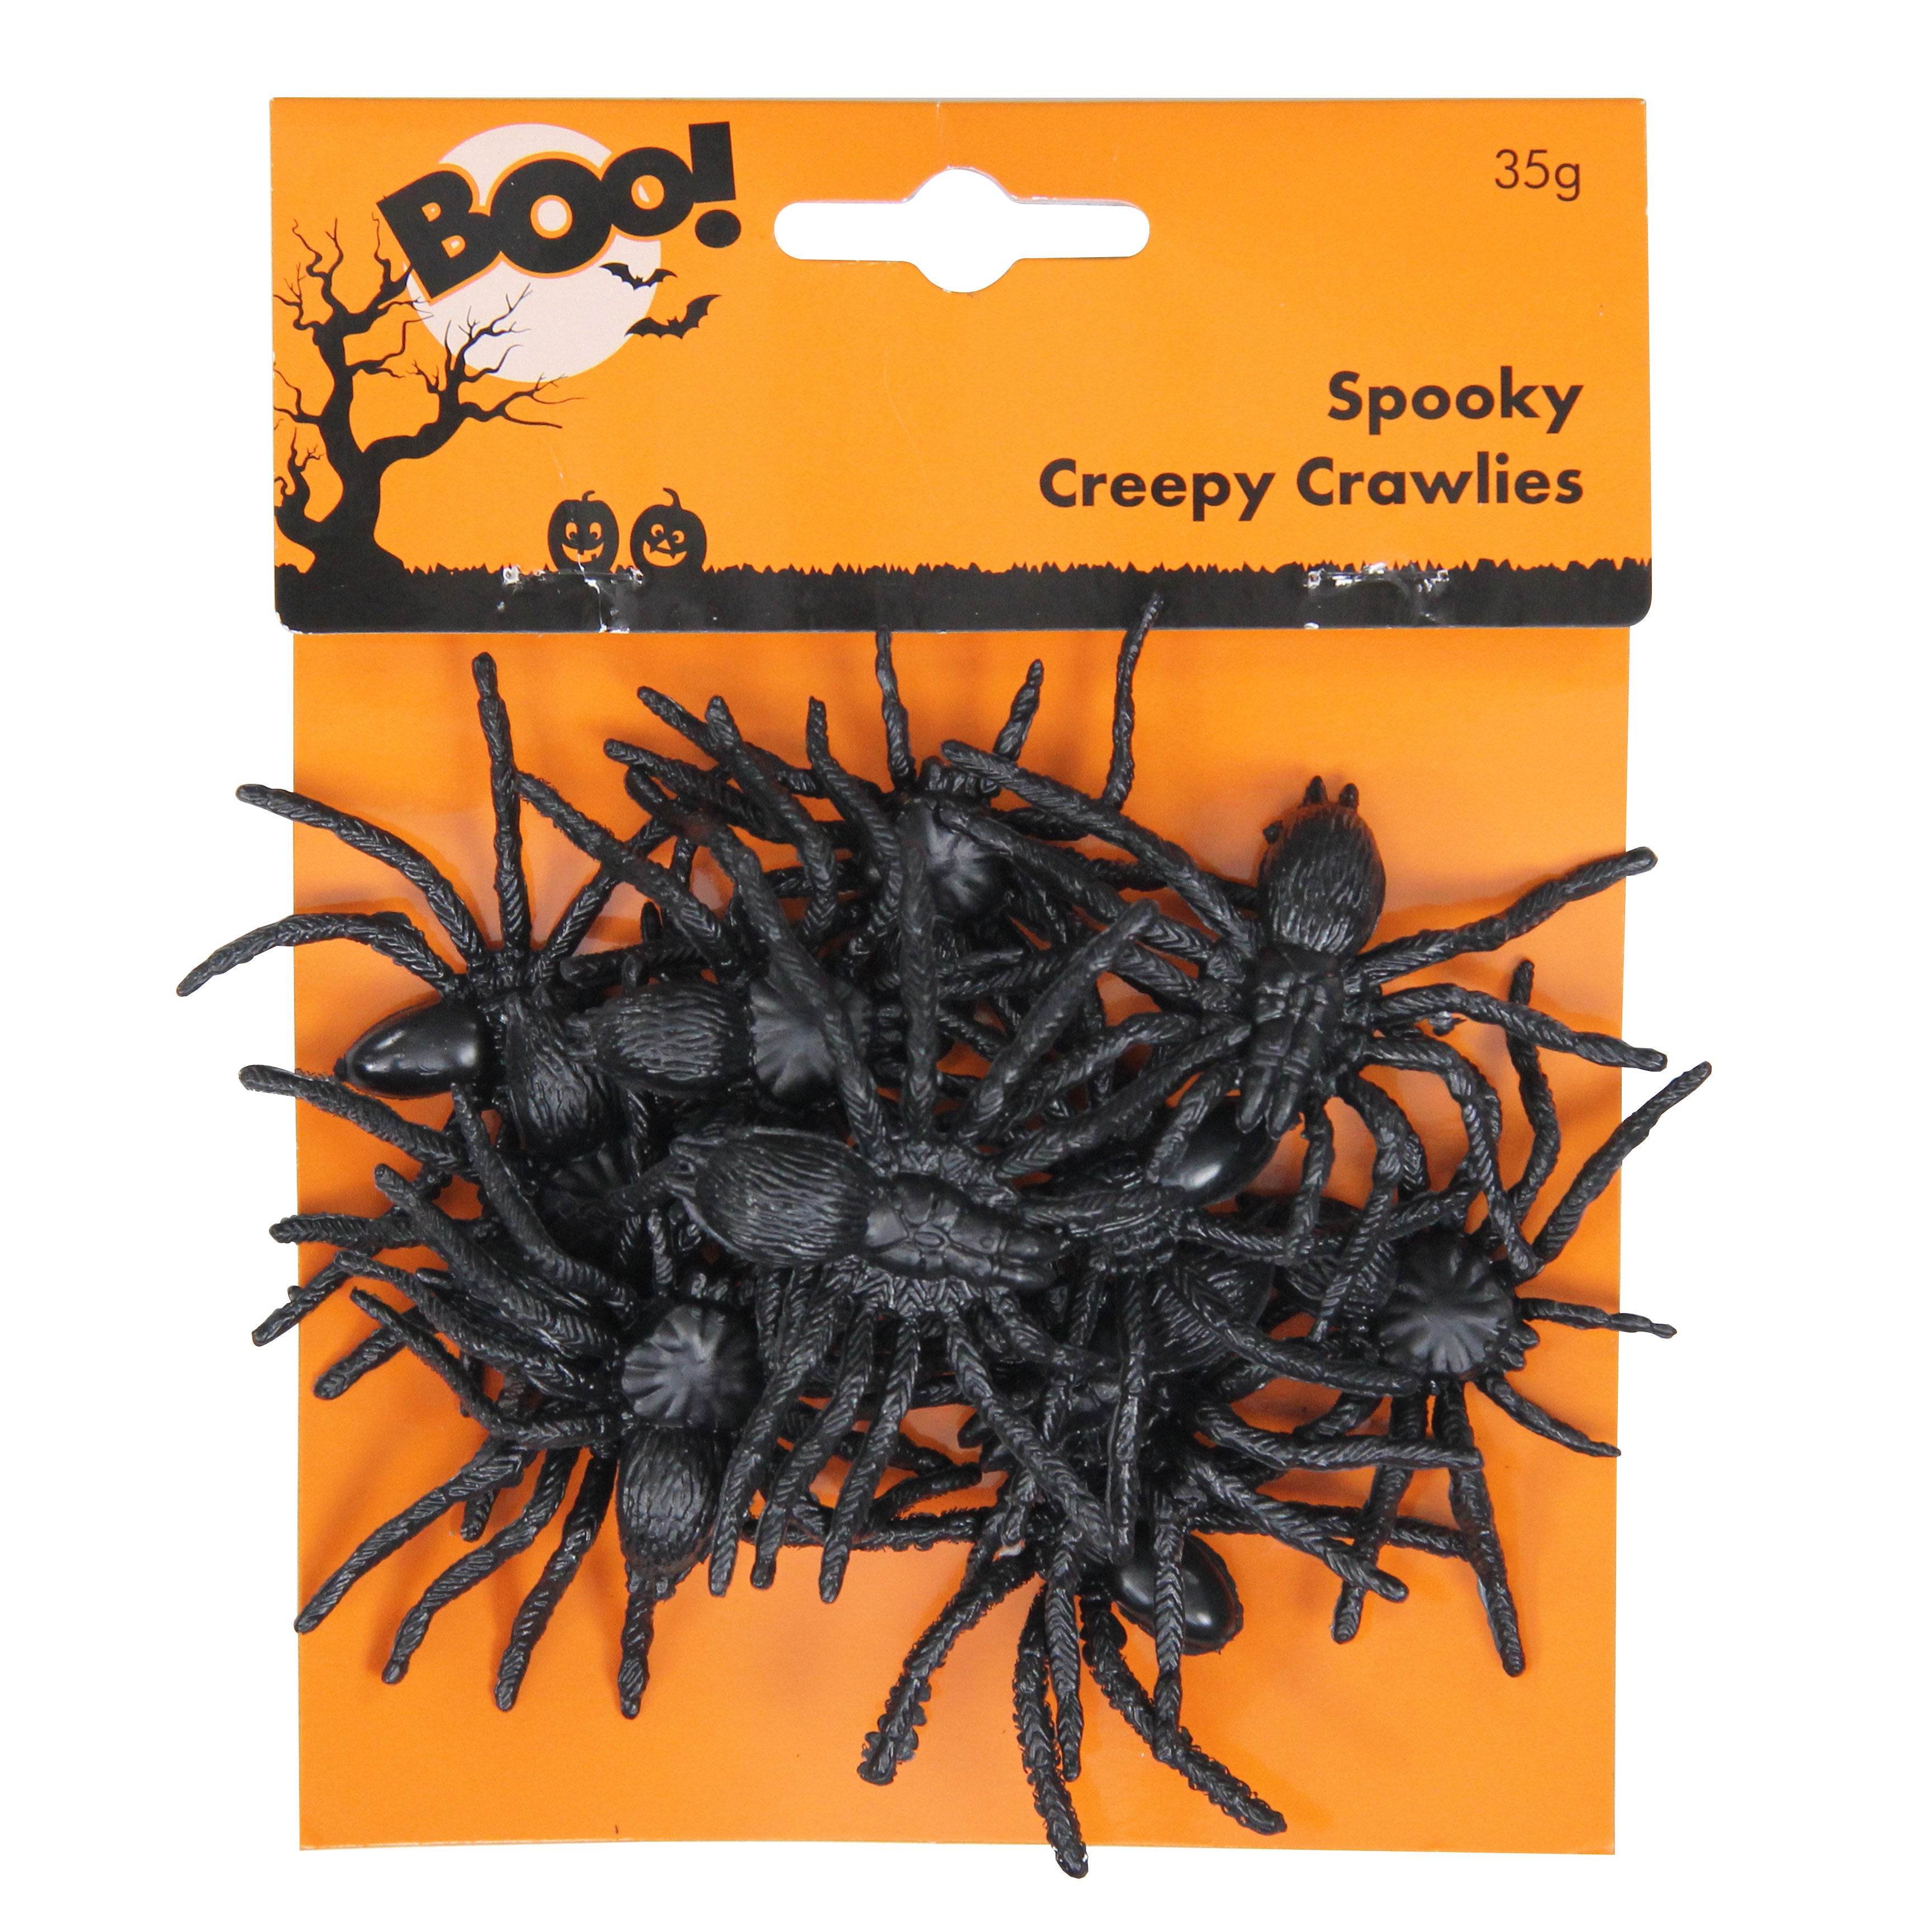 Spooky Creepy Crawlies - 35g